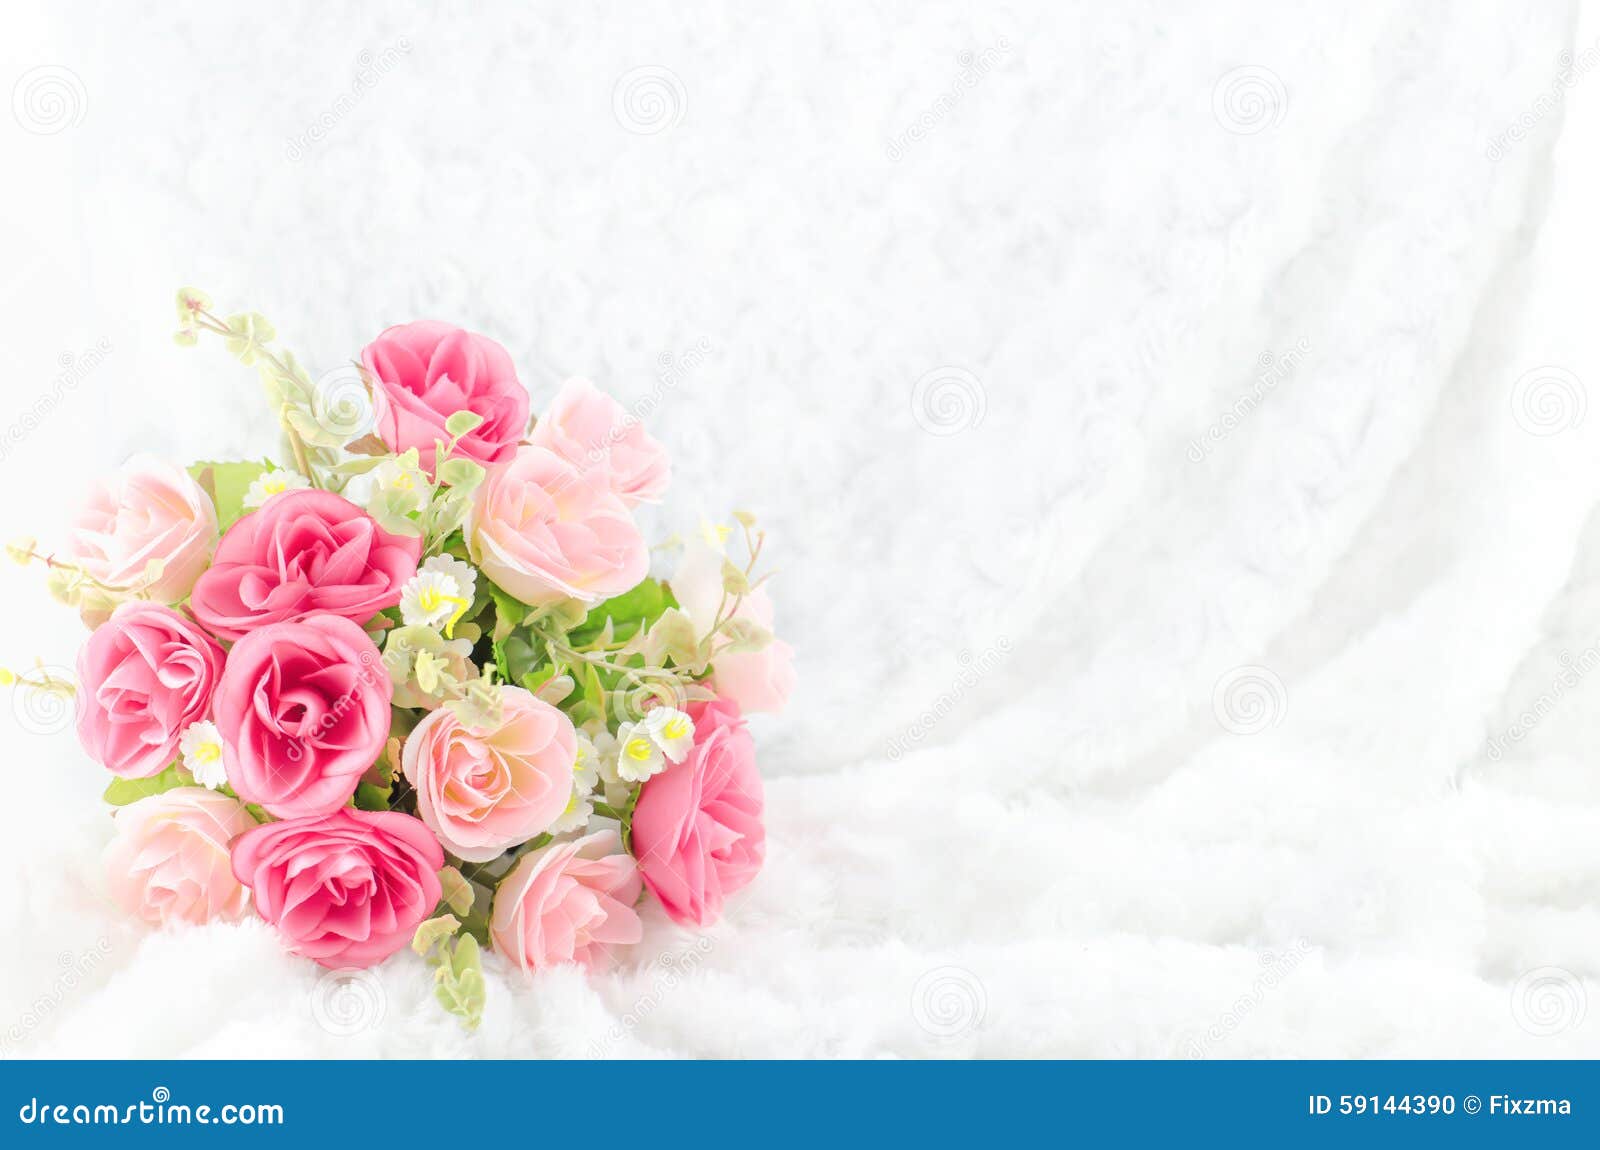 Pastel Coloured Artificial Pink Rose On White Fur Background Stock Photo  59144390 - Megapixl